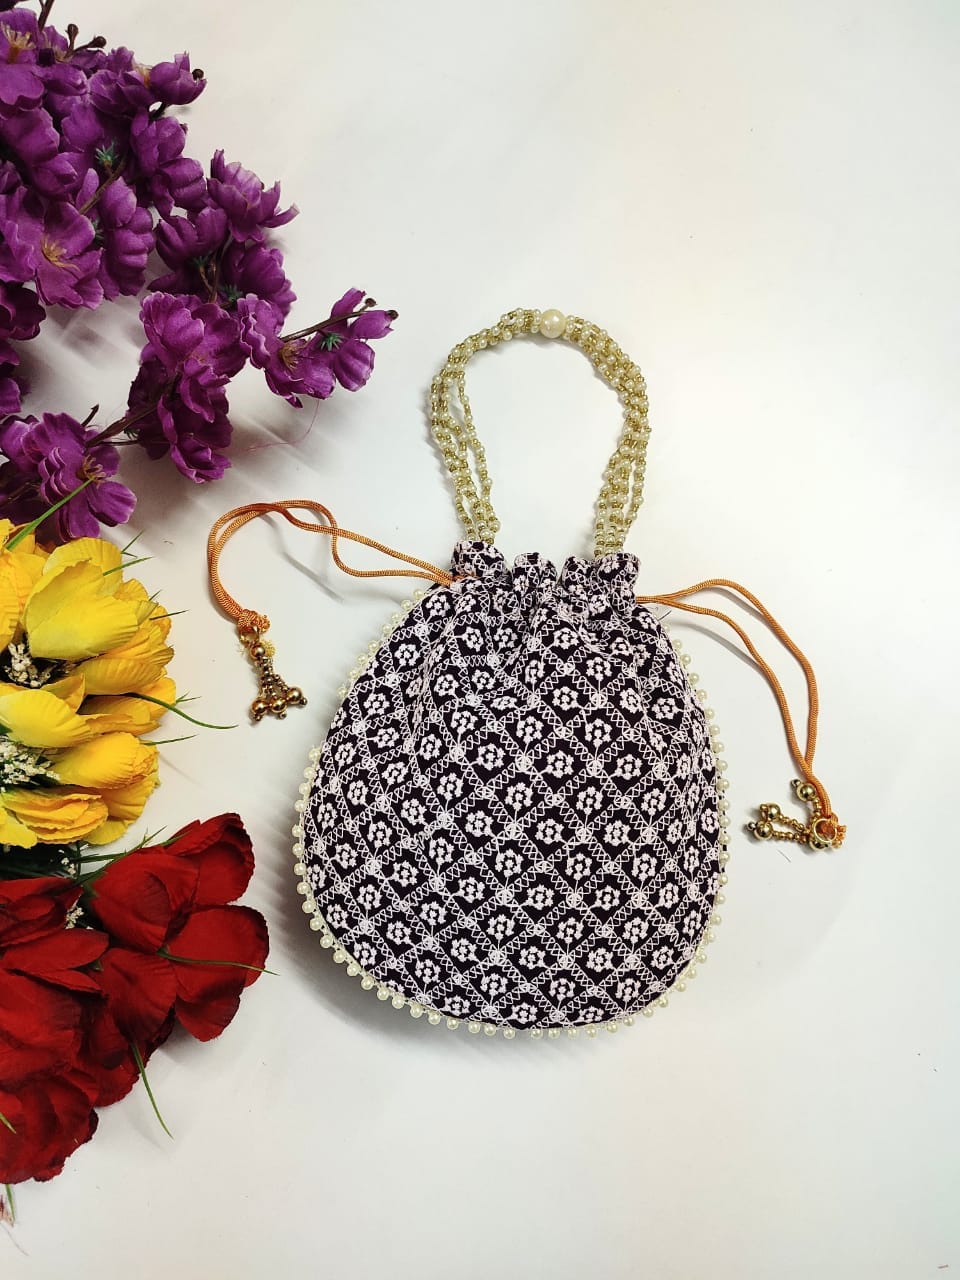 LAMANSH ® Women's Potli Bag Pack of 20 / Assorted Colour Patterns LAMANSH 20 Pcs Potli bags for women handbags traditional Indian Wristlet with Drawstring Ethnic Embroidery Women Fashion Potli